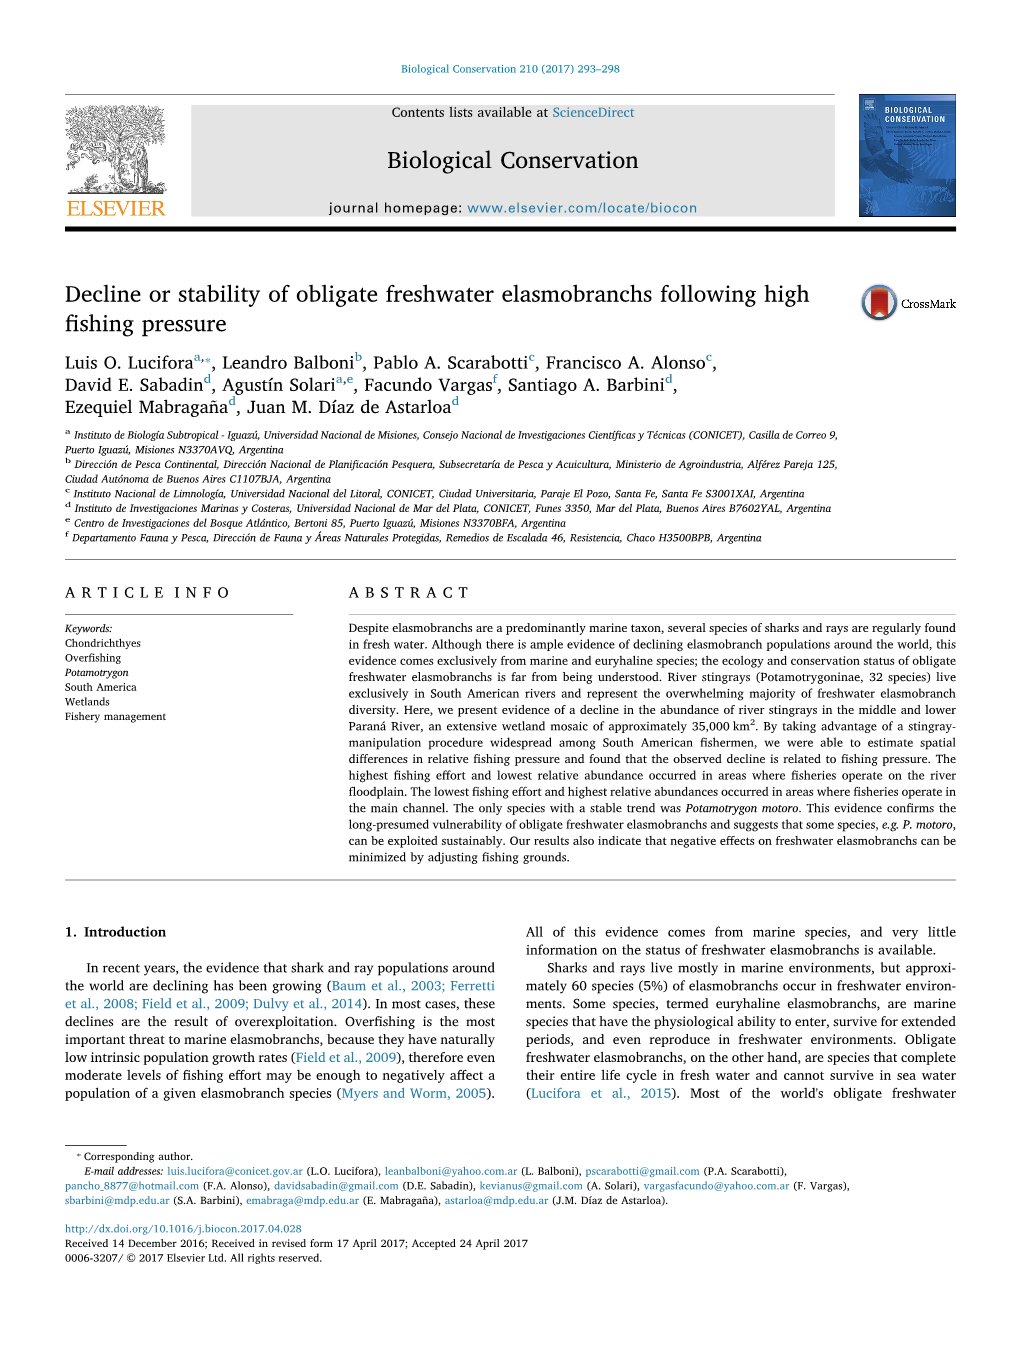 Decline Or Stability of Obligate Freshwater Elasmobranchs Following High ﬁshing Pressure MARK